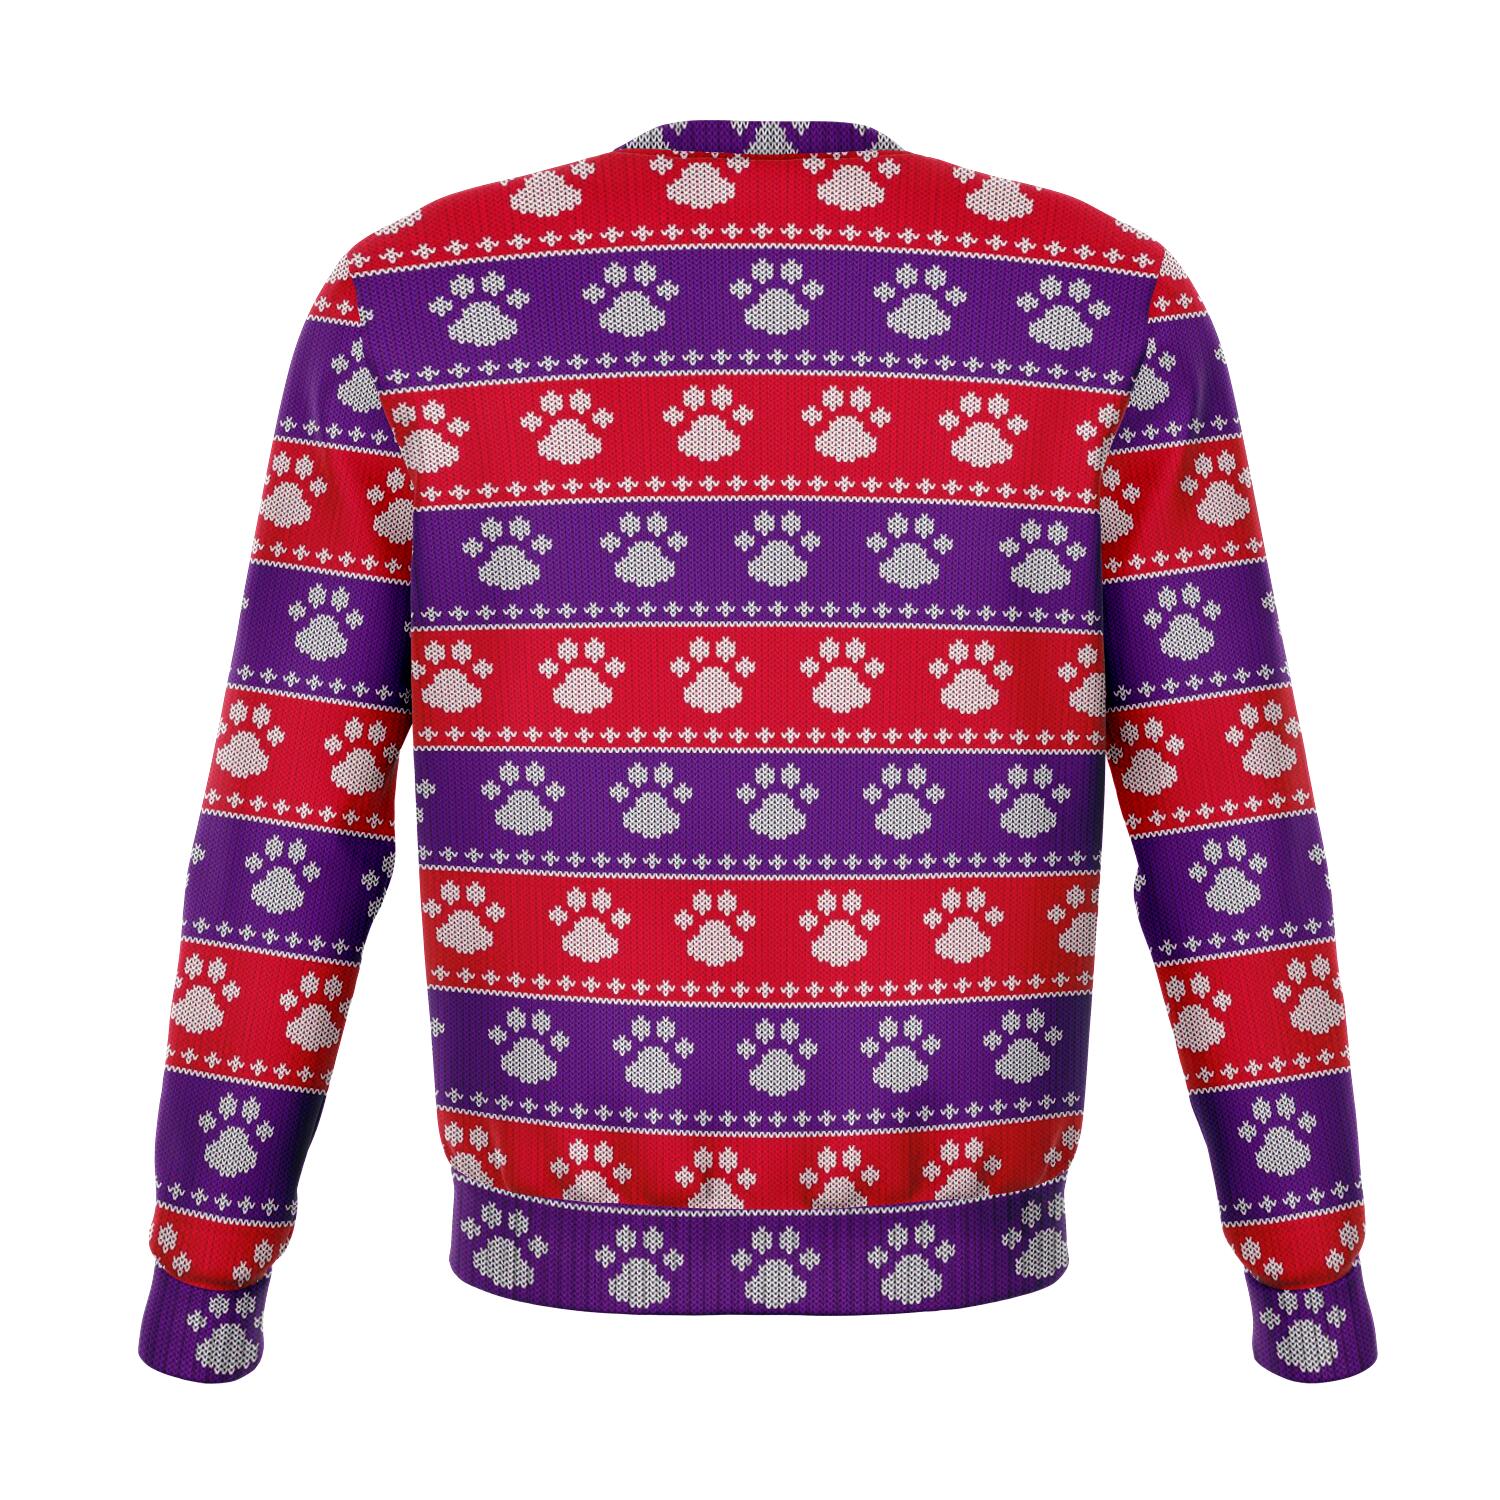 Pugs Ugly Christmas Sweater, Dog Funny Eating Snacks Print Party Sweatshirt Holiday Men Women Christmas Gift Plus Size Starcove Fashion